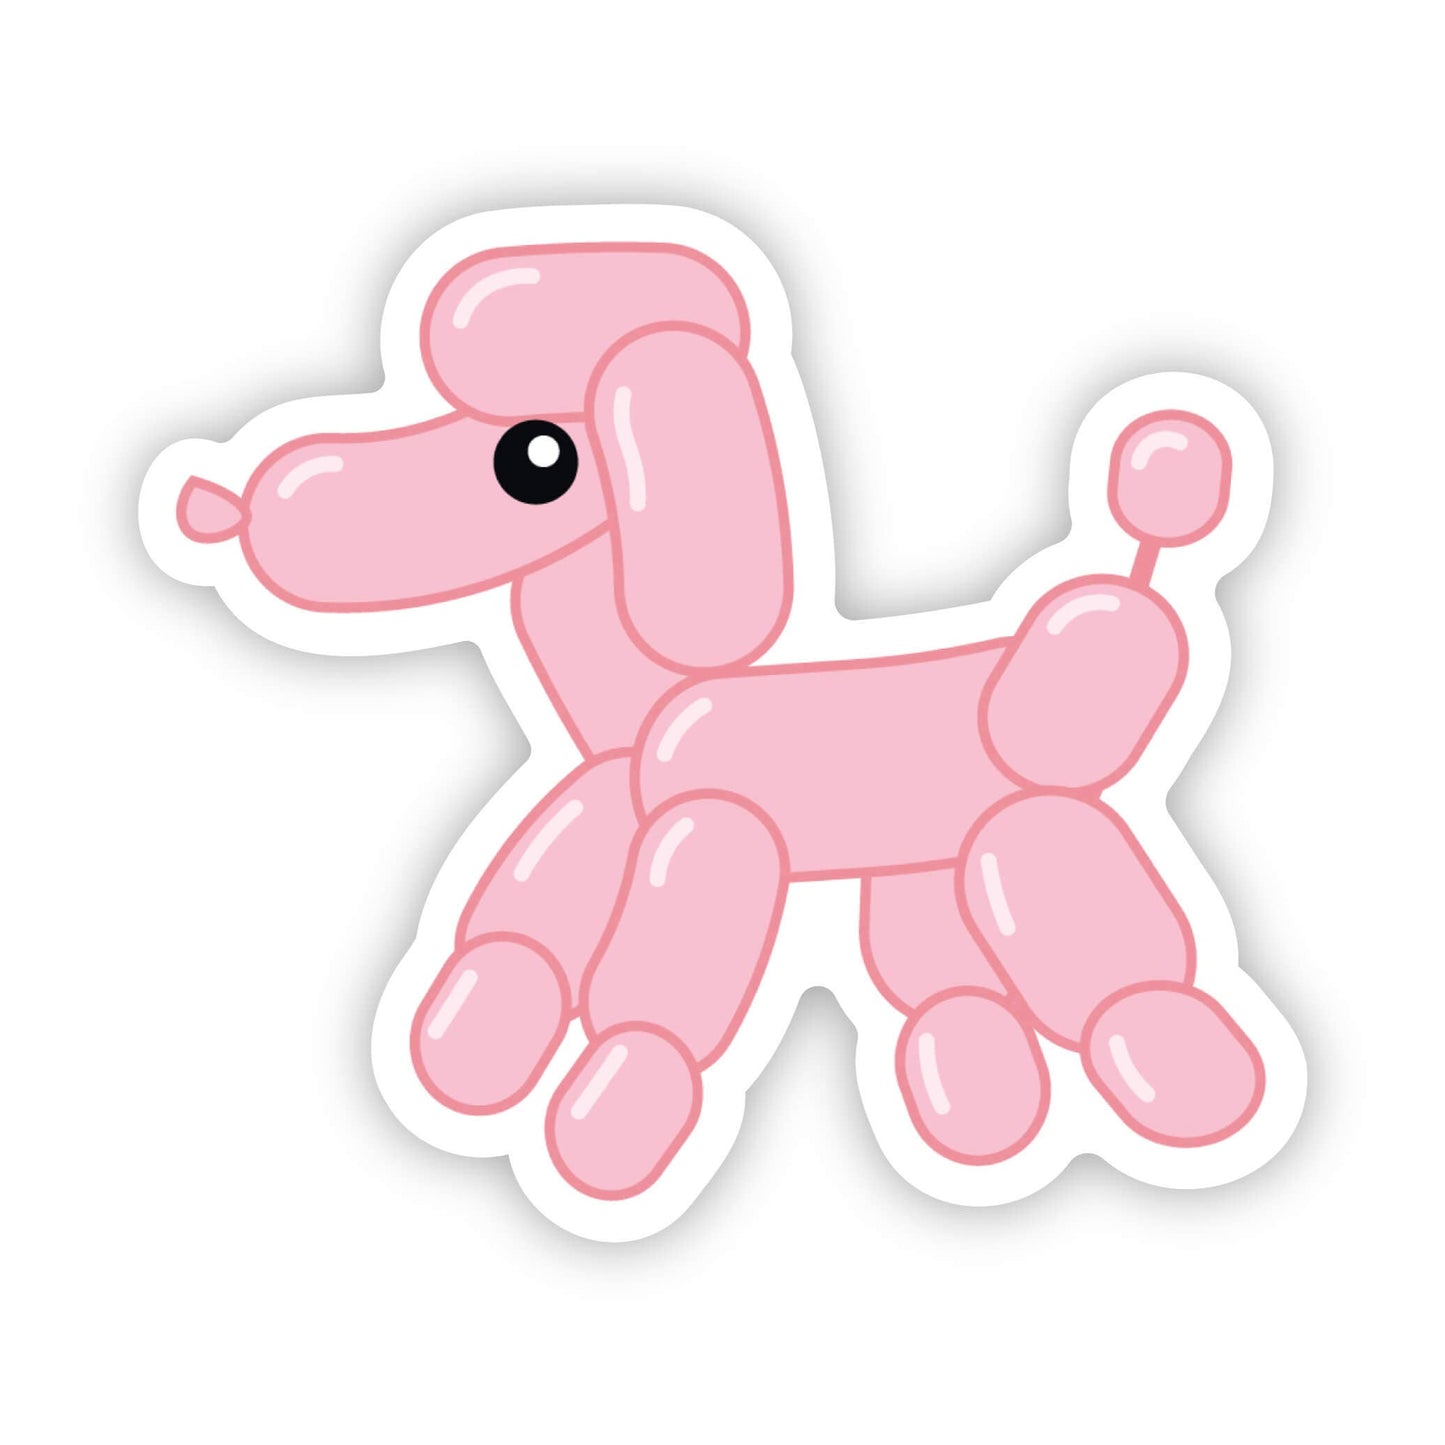 Sticker-Dog-03: Dog Balloon - Pink Poodle